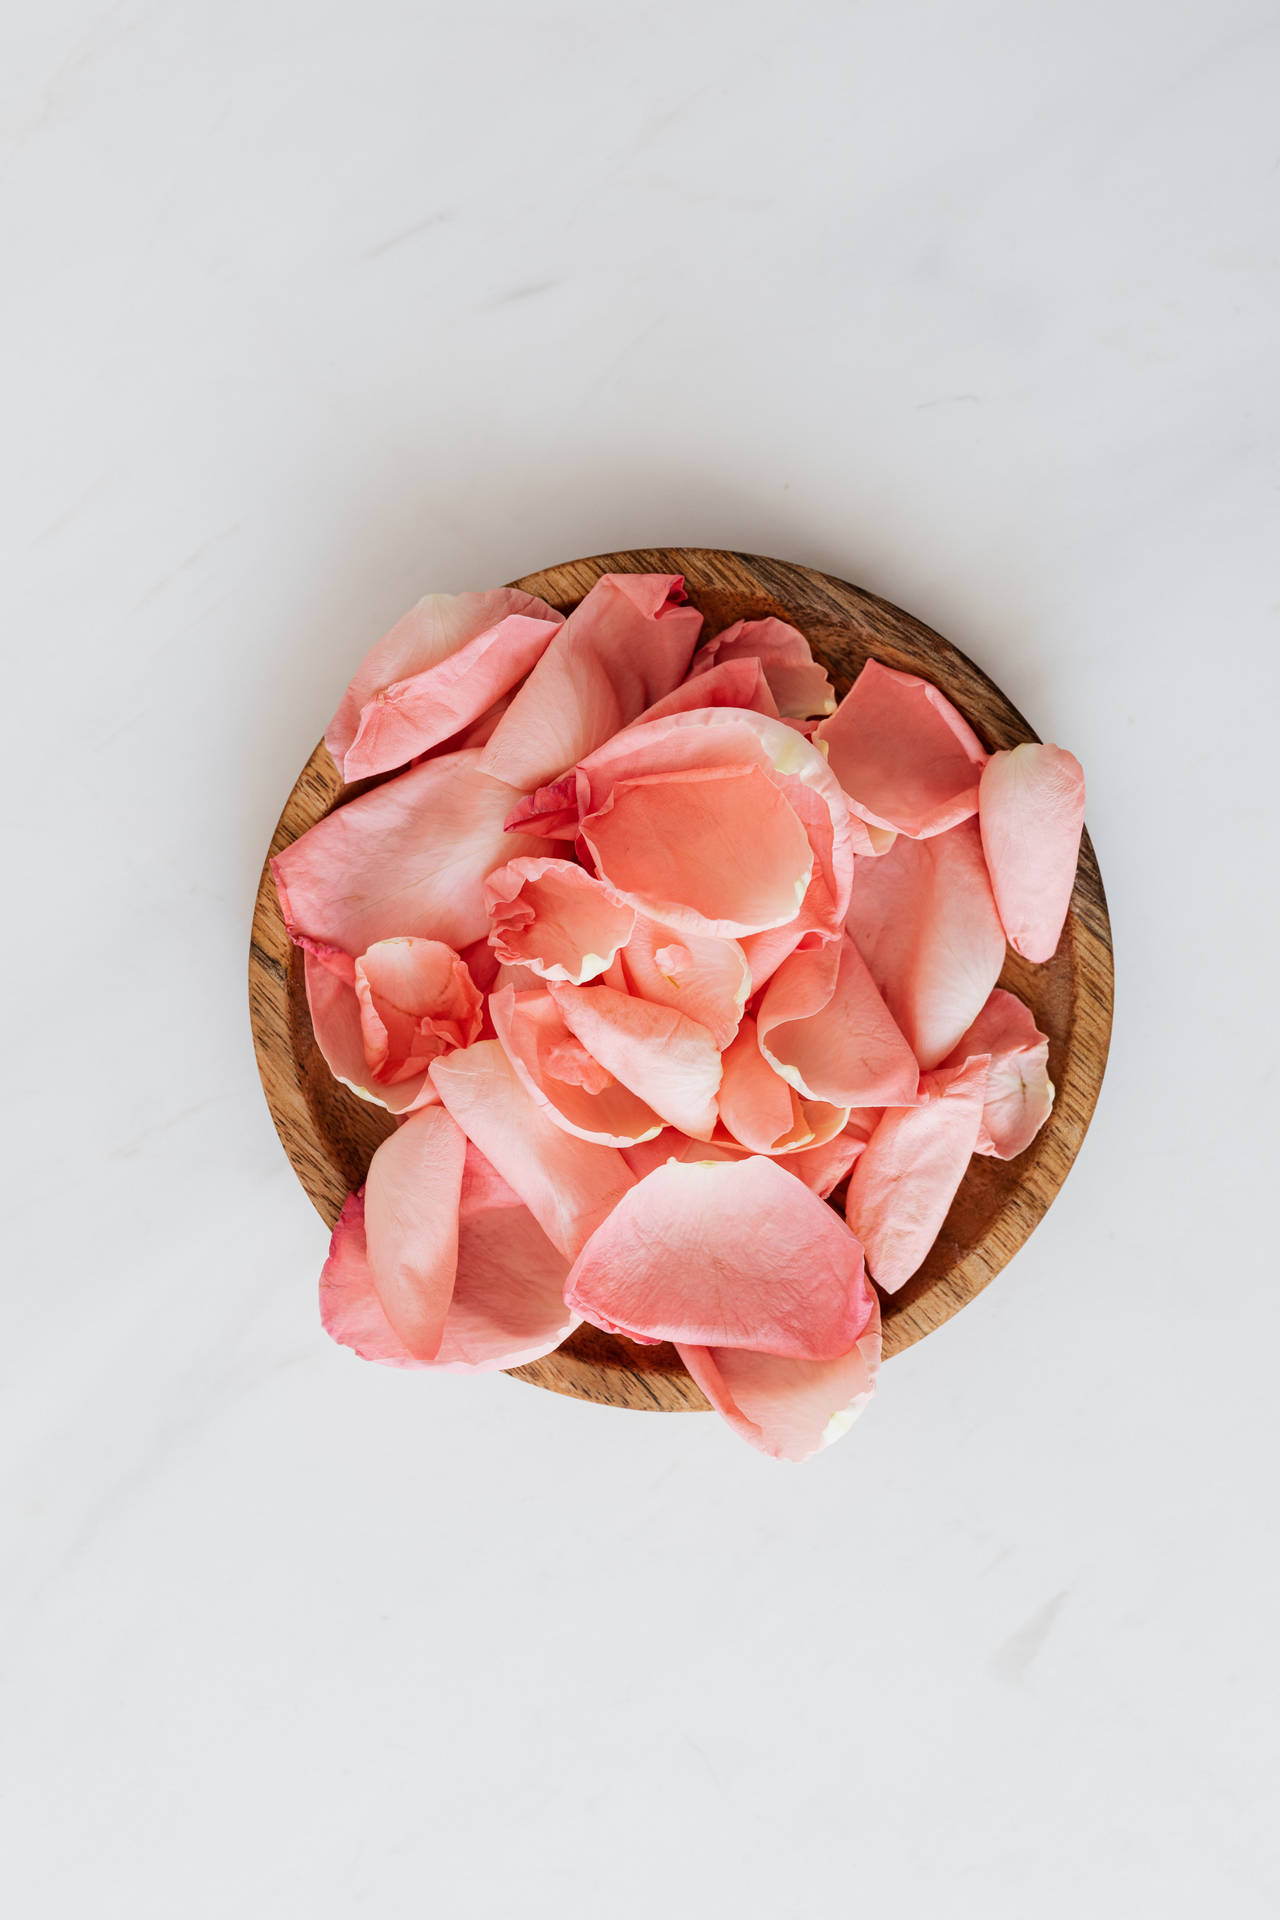 Bowl Of Pink Rose Petals Wallpaper